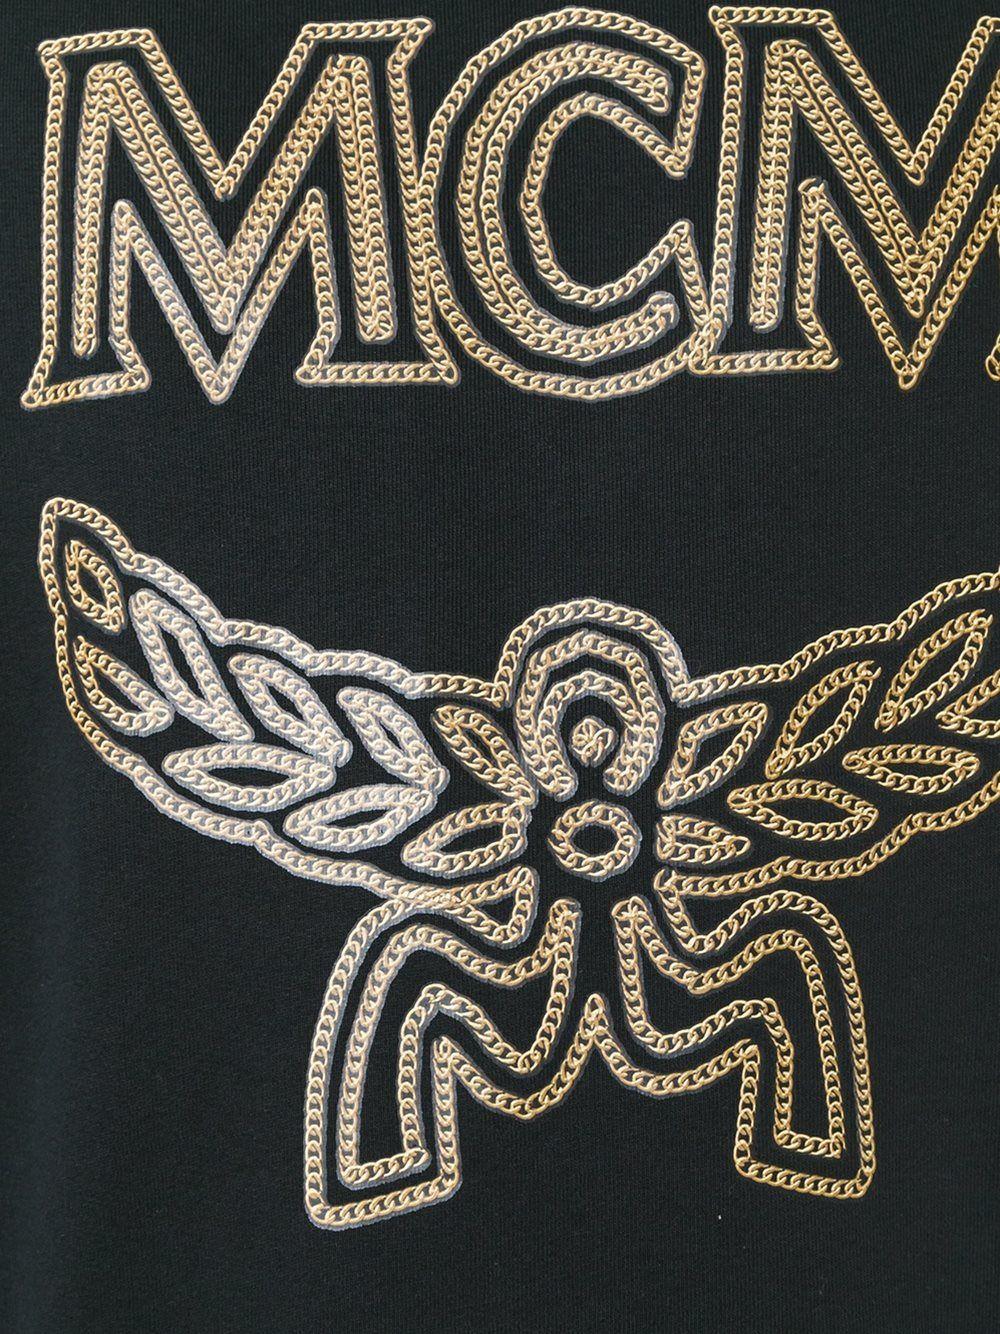 MCM Clothing Logo - MCM logo print sweatshirt Unisex Clothing, mcm beats earphones, 100